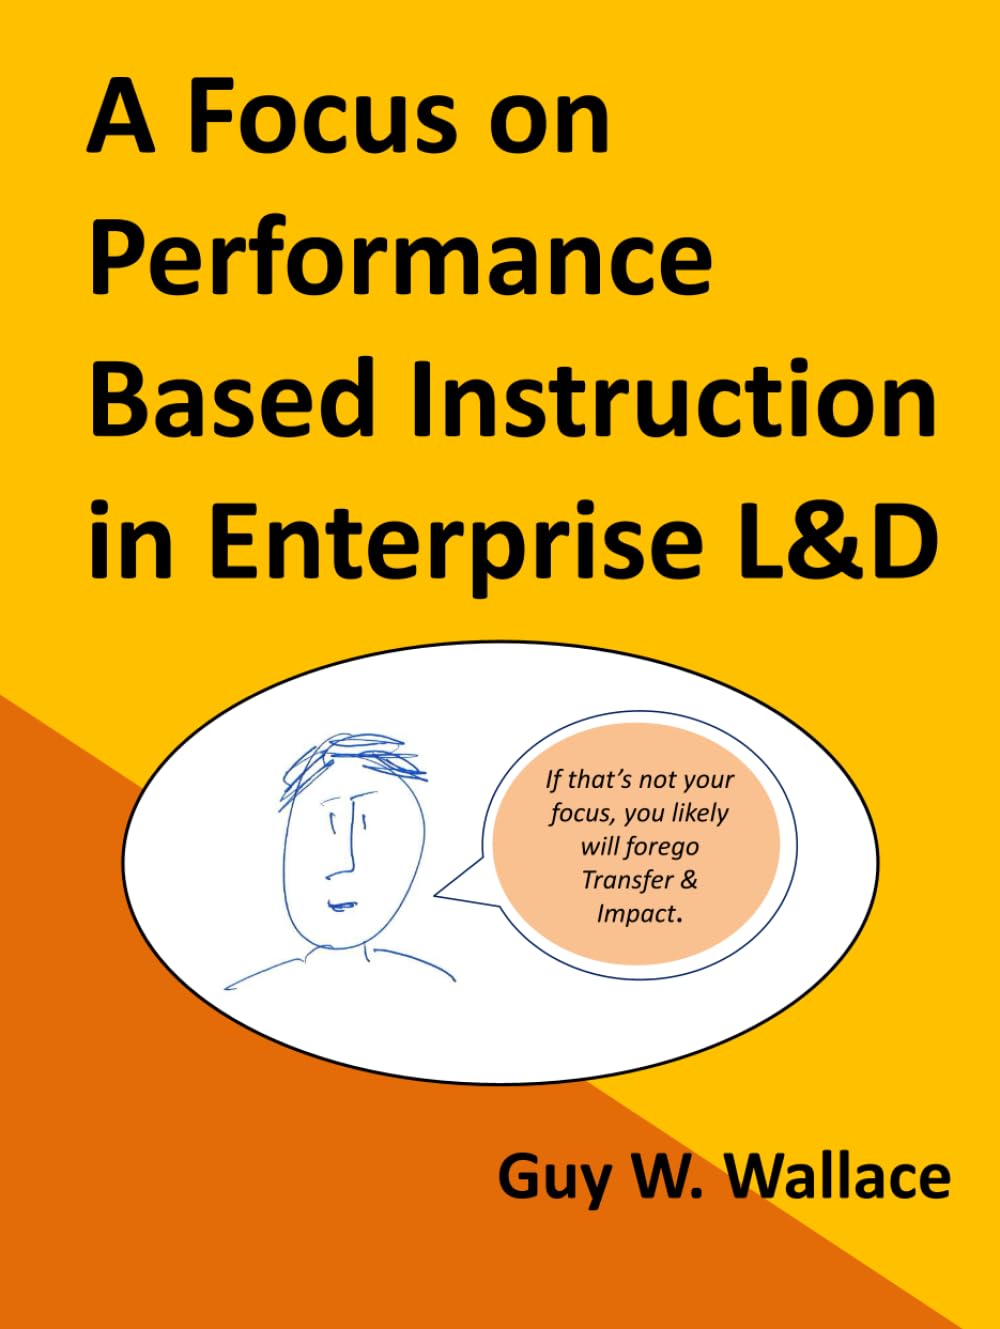 A Focus on Performance Based Instruction in Enterprise L&D